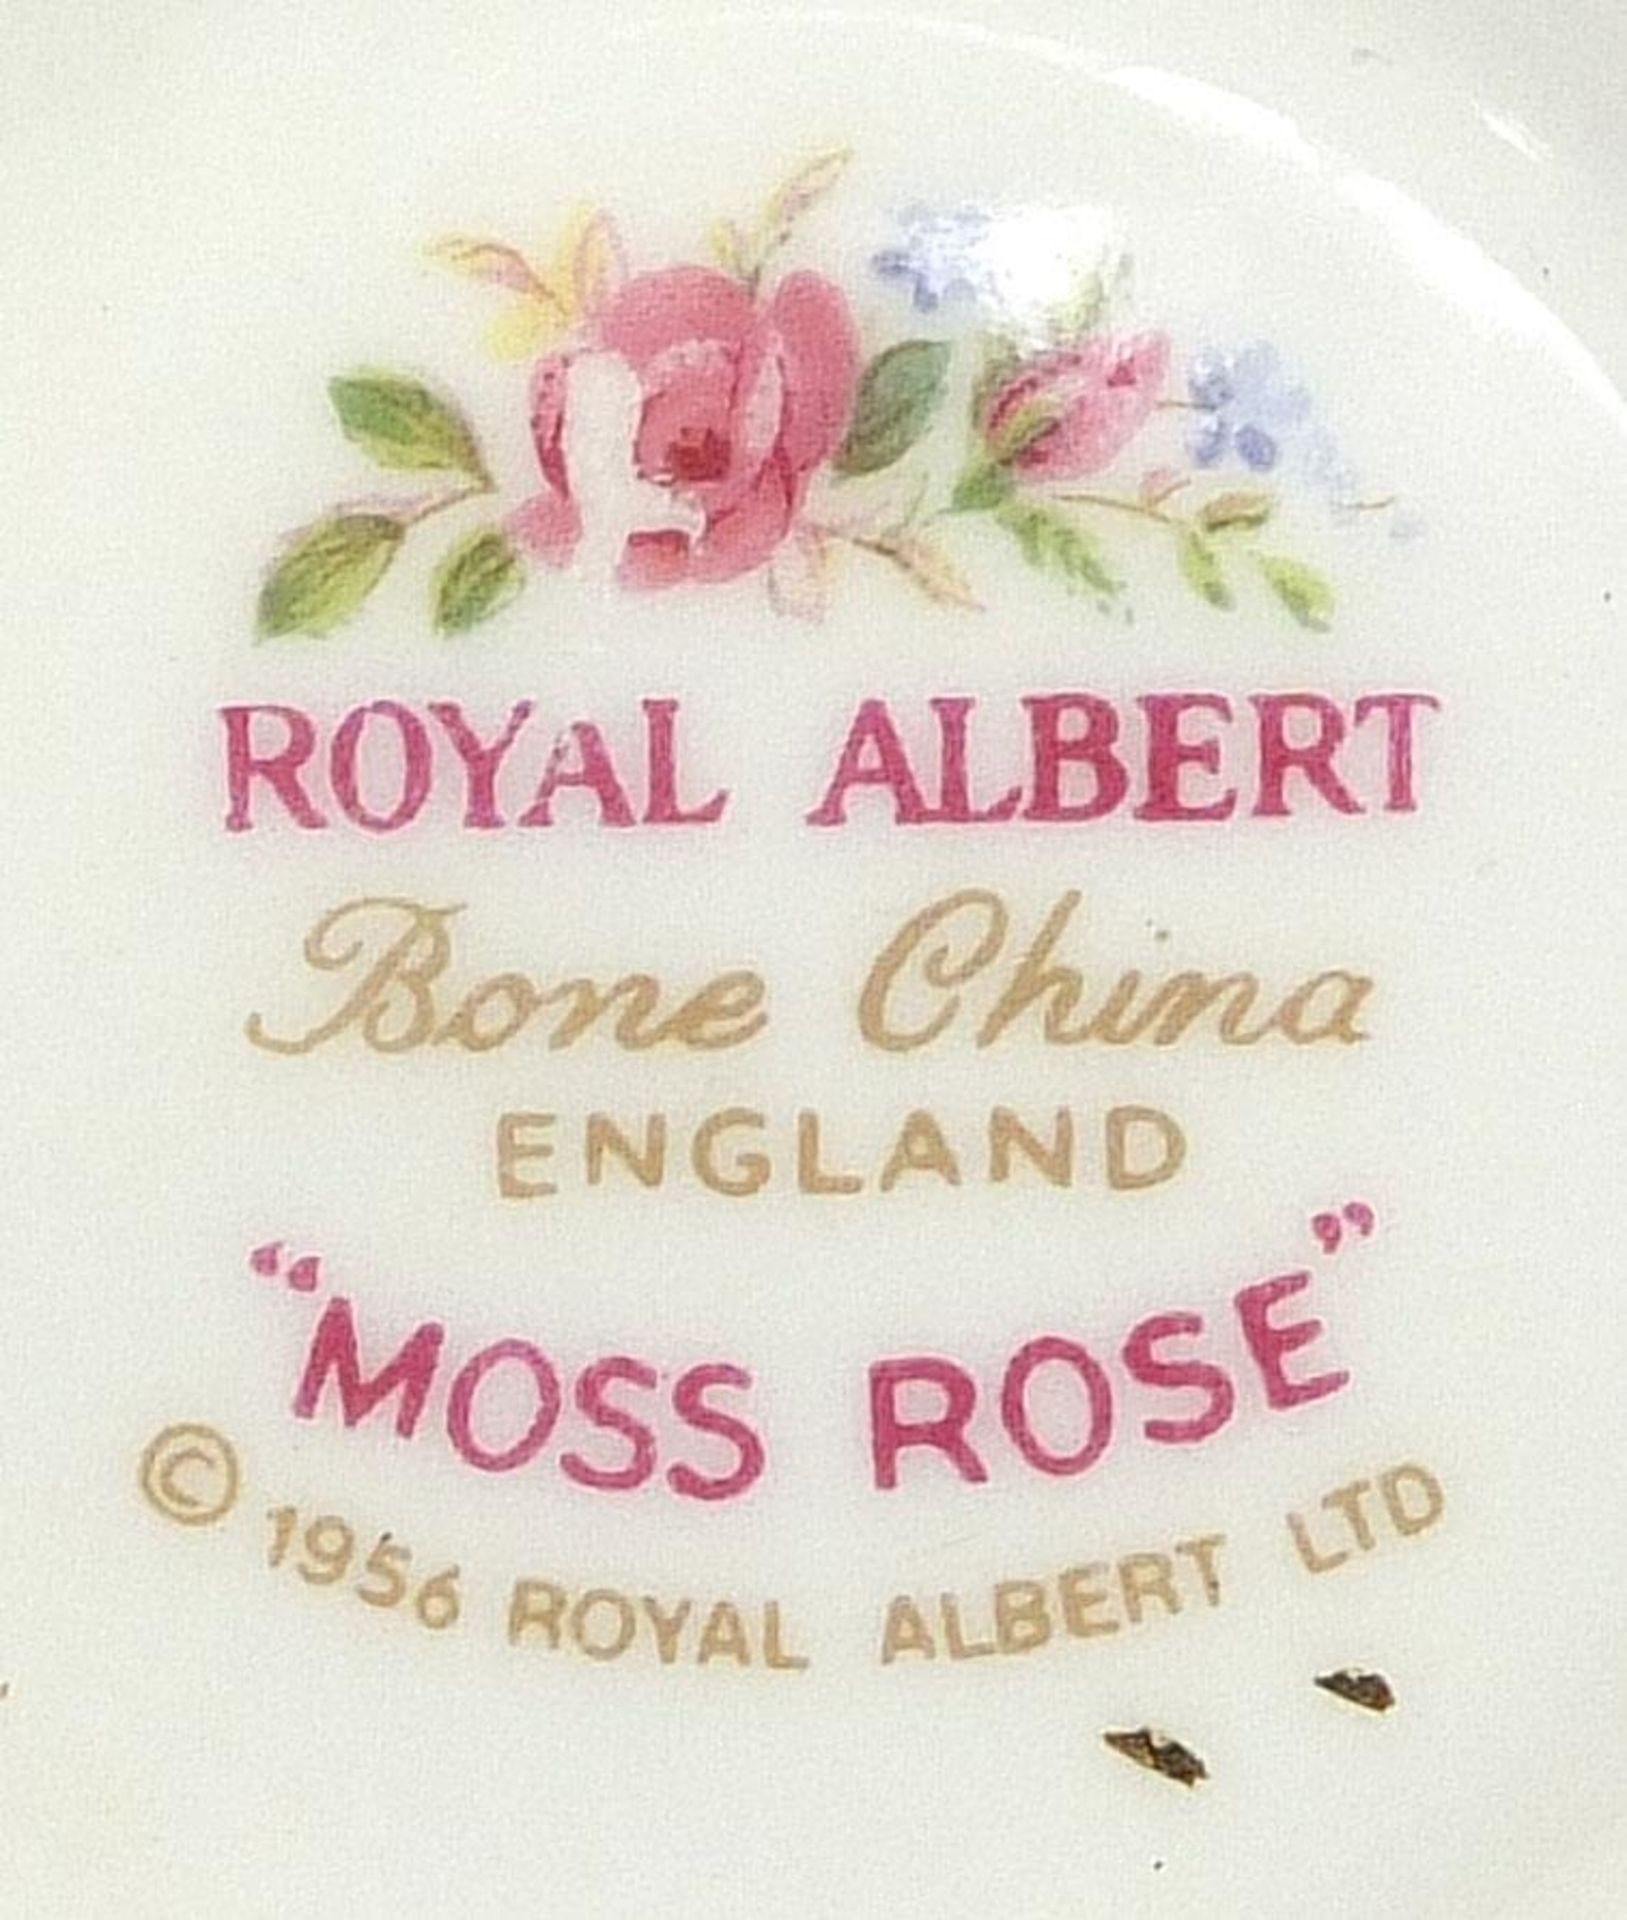 Royal Albert Moss Rose teaware including six trios, the largest each 22.5cm in diameter - Image 4 of 4